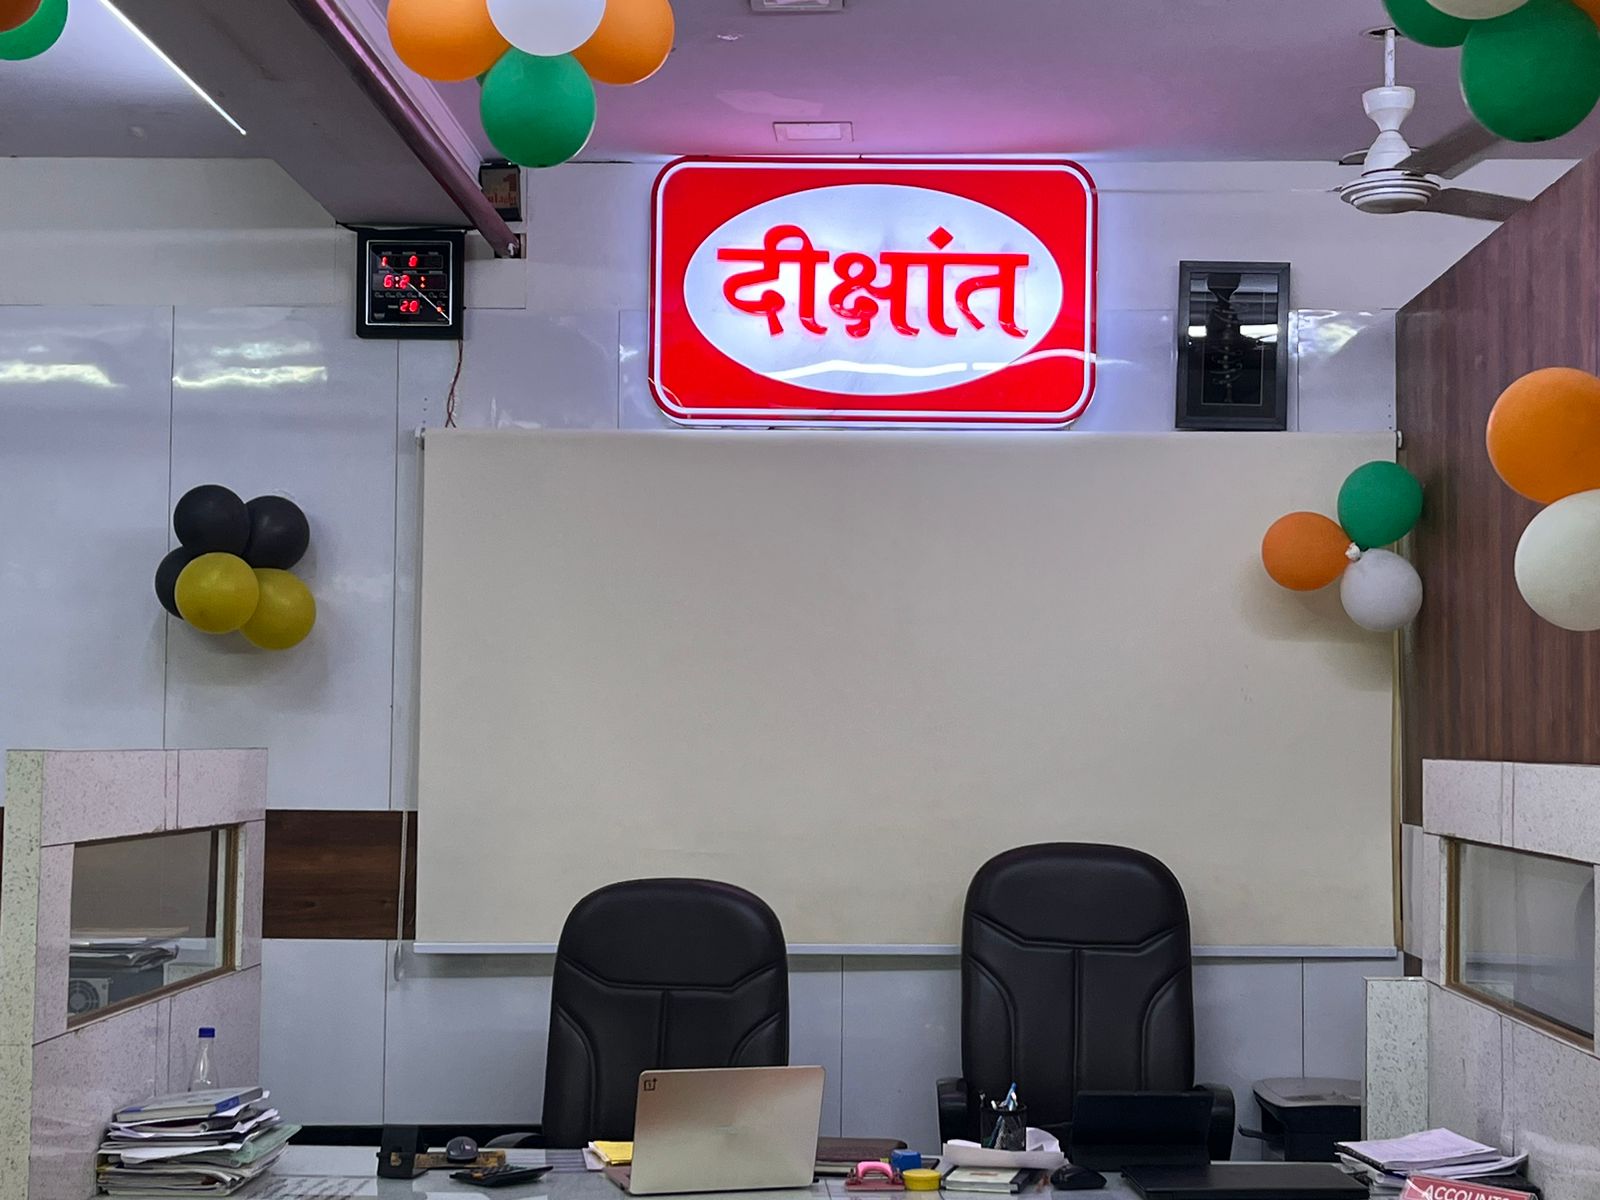 Dikshant Office